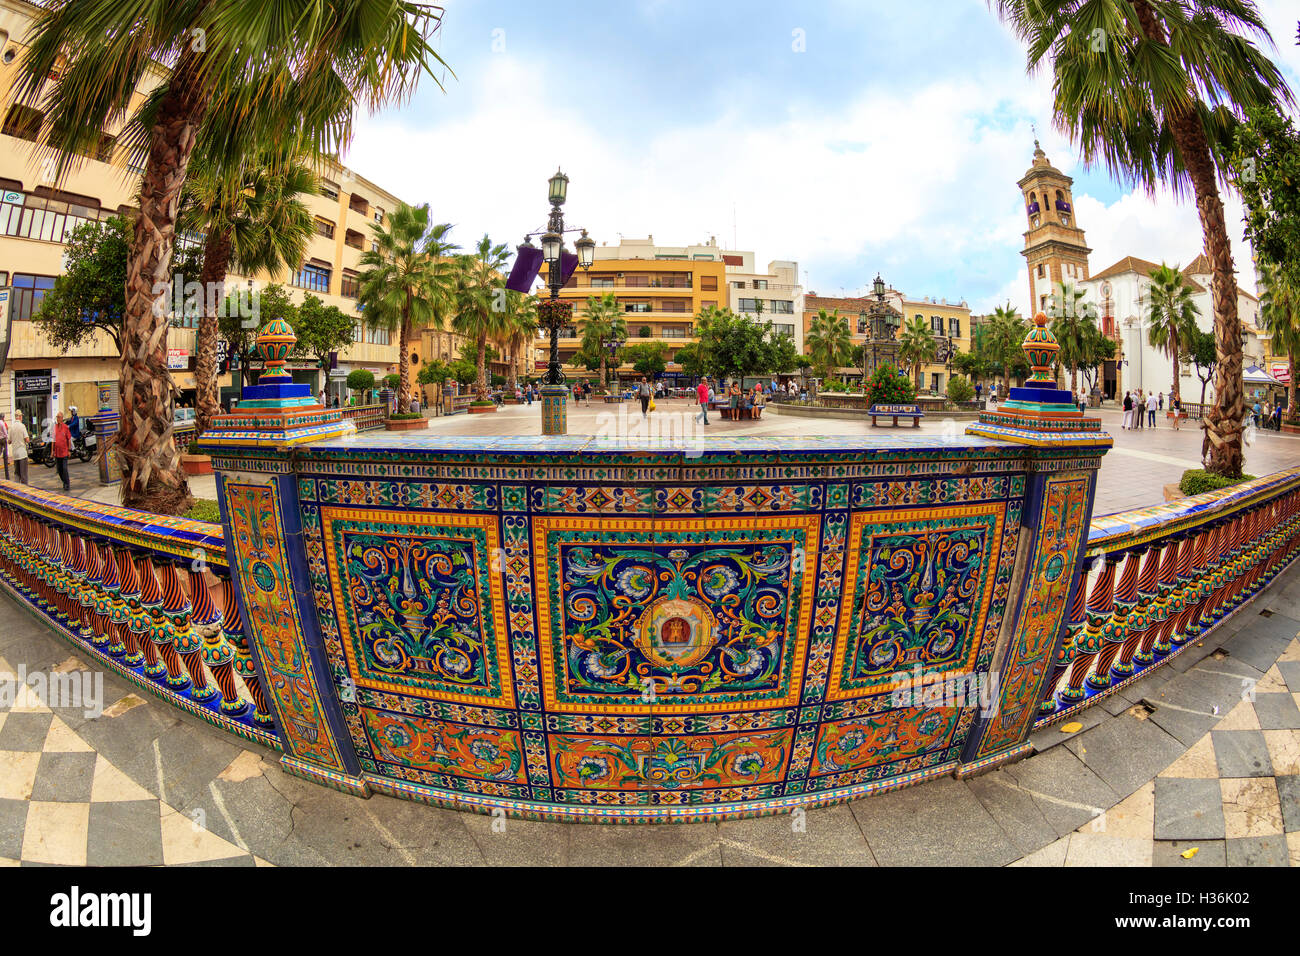 Detail der Umrandung Plaza Alta in Algeciras, hell mit Sevilla Keramik verziert.  Fish eye Perspektive. Stockfoto